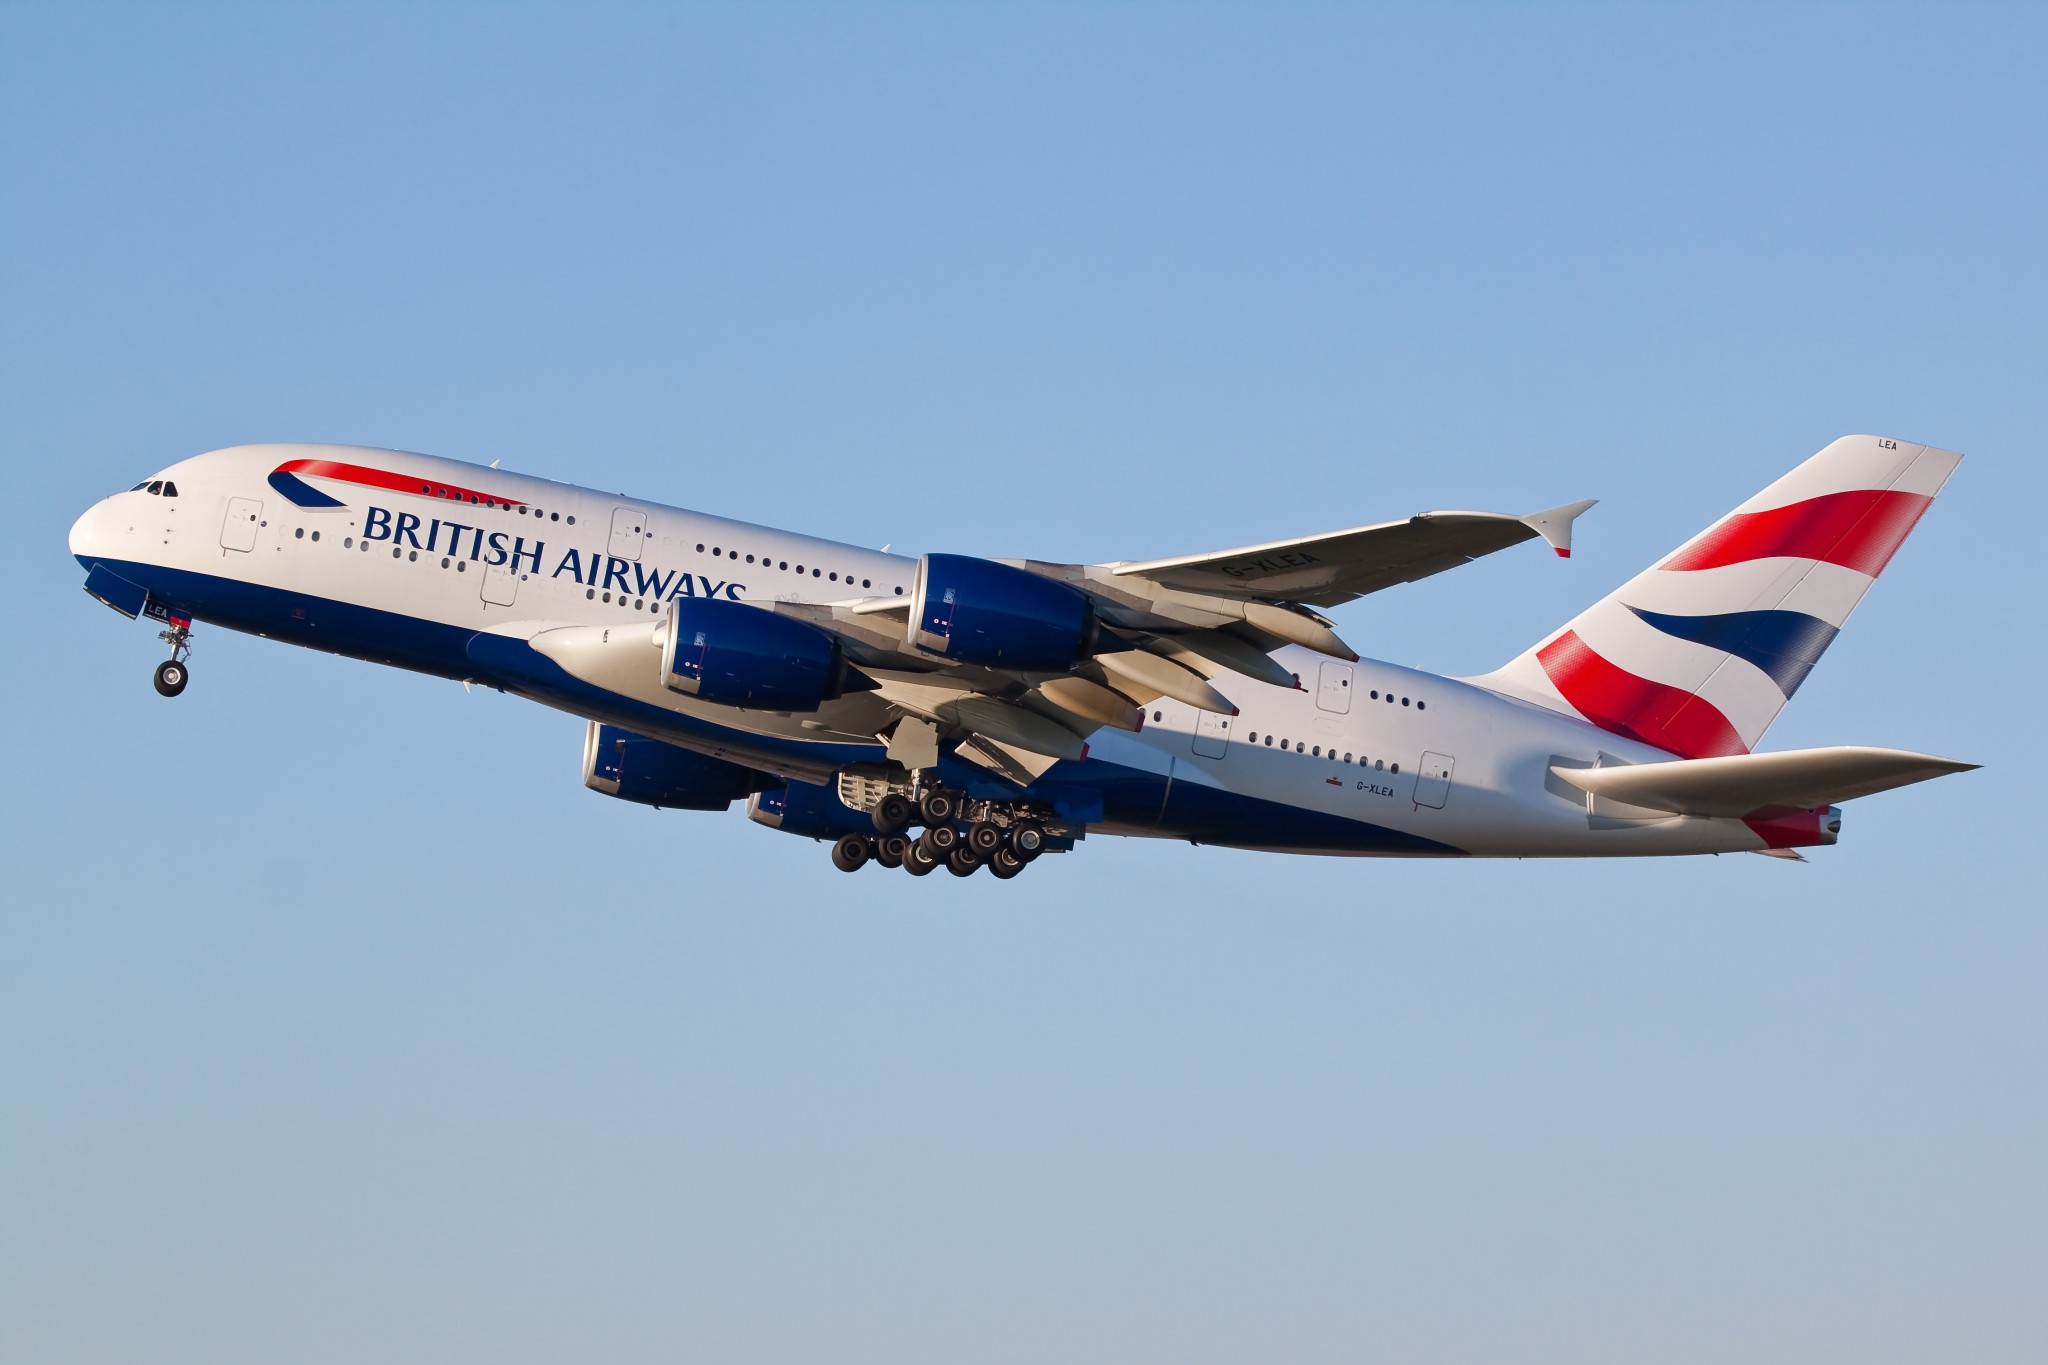 British Airways EETC priced